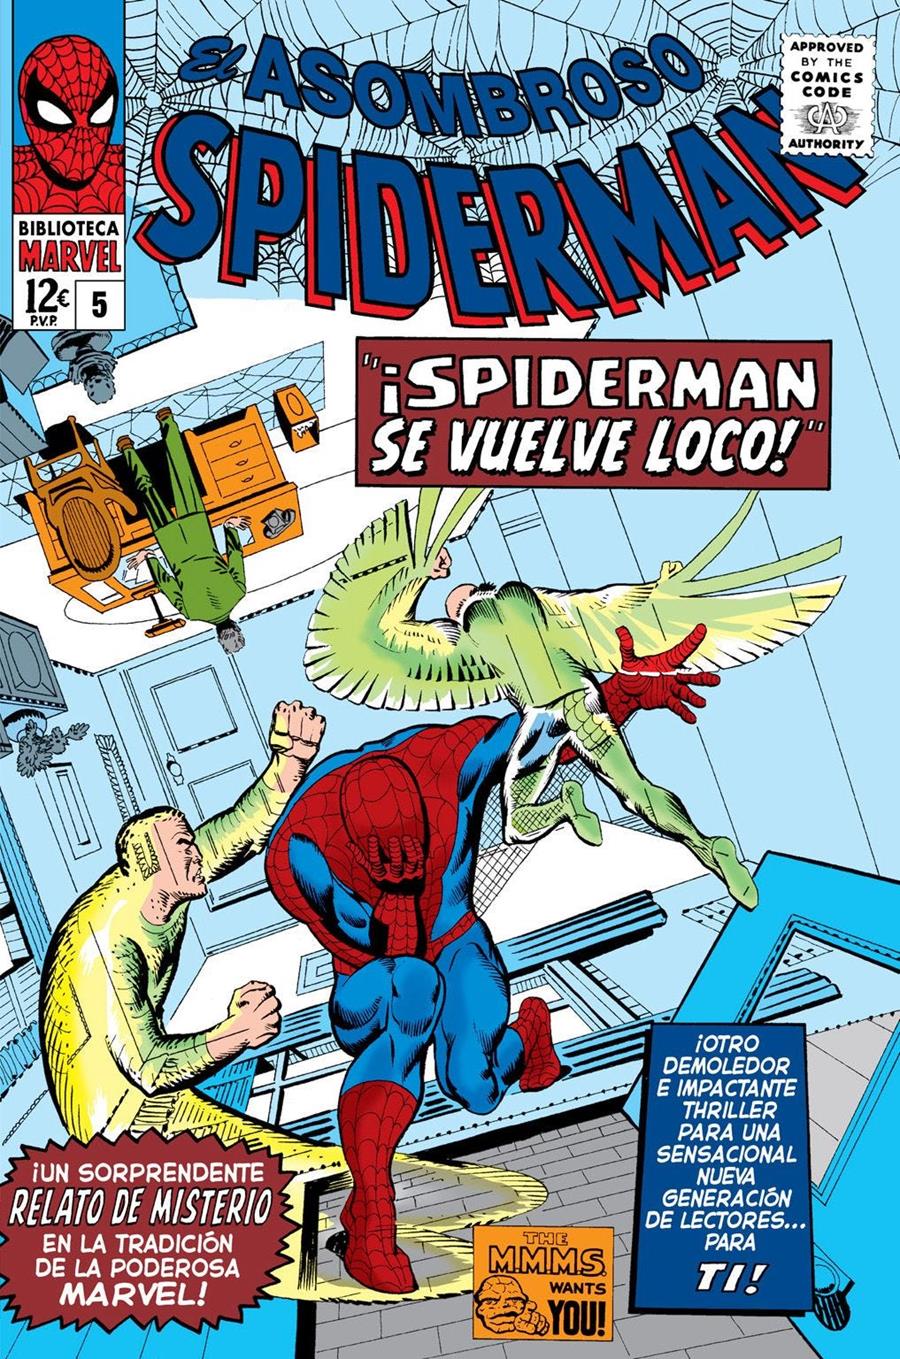 Biblioteca Marvel 32. El Asombroso Spiderman 5. 1965 | N1023-PAN43 | Steve Ditko, Stan Lee | Terra de Còmic - Tu tienda de cómics online especializada en cómics, manga y merchandising